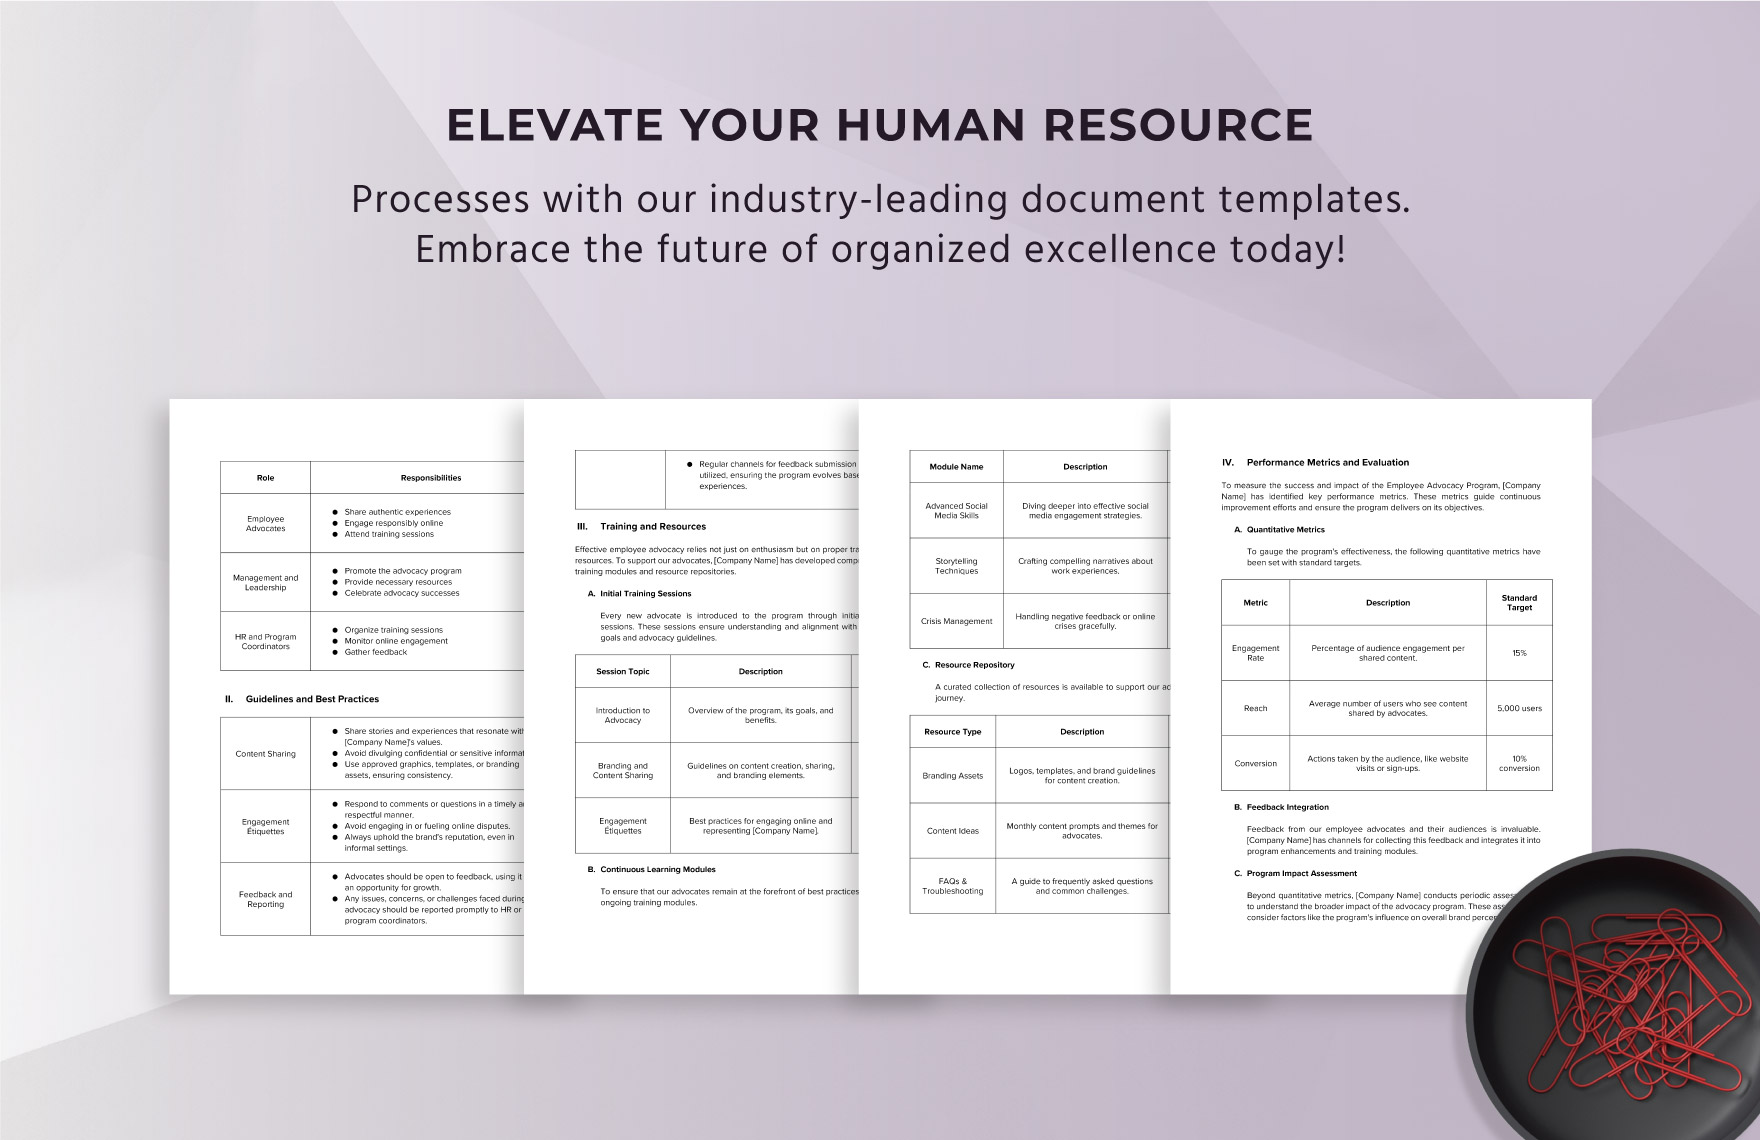 Comprehensive Employee Advocacy Program Manual HR Template